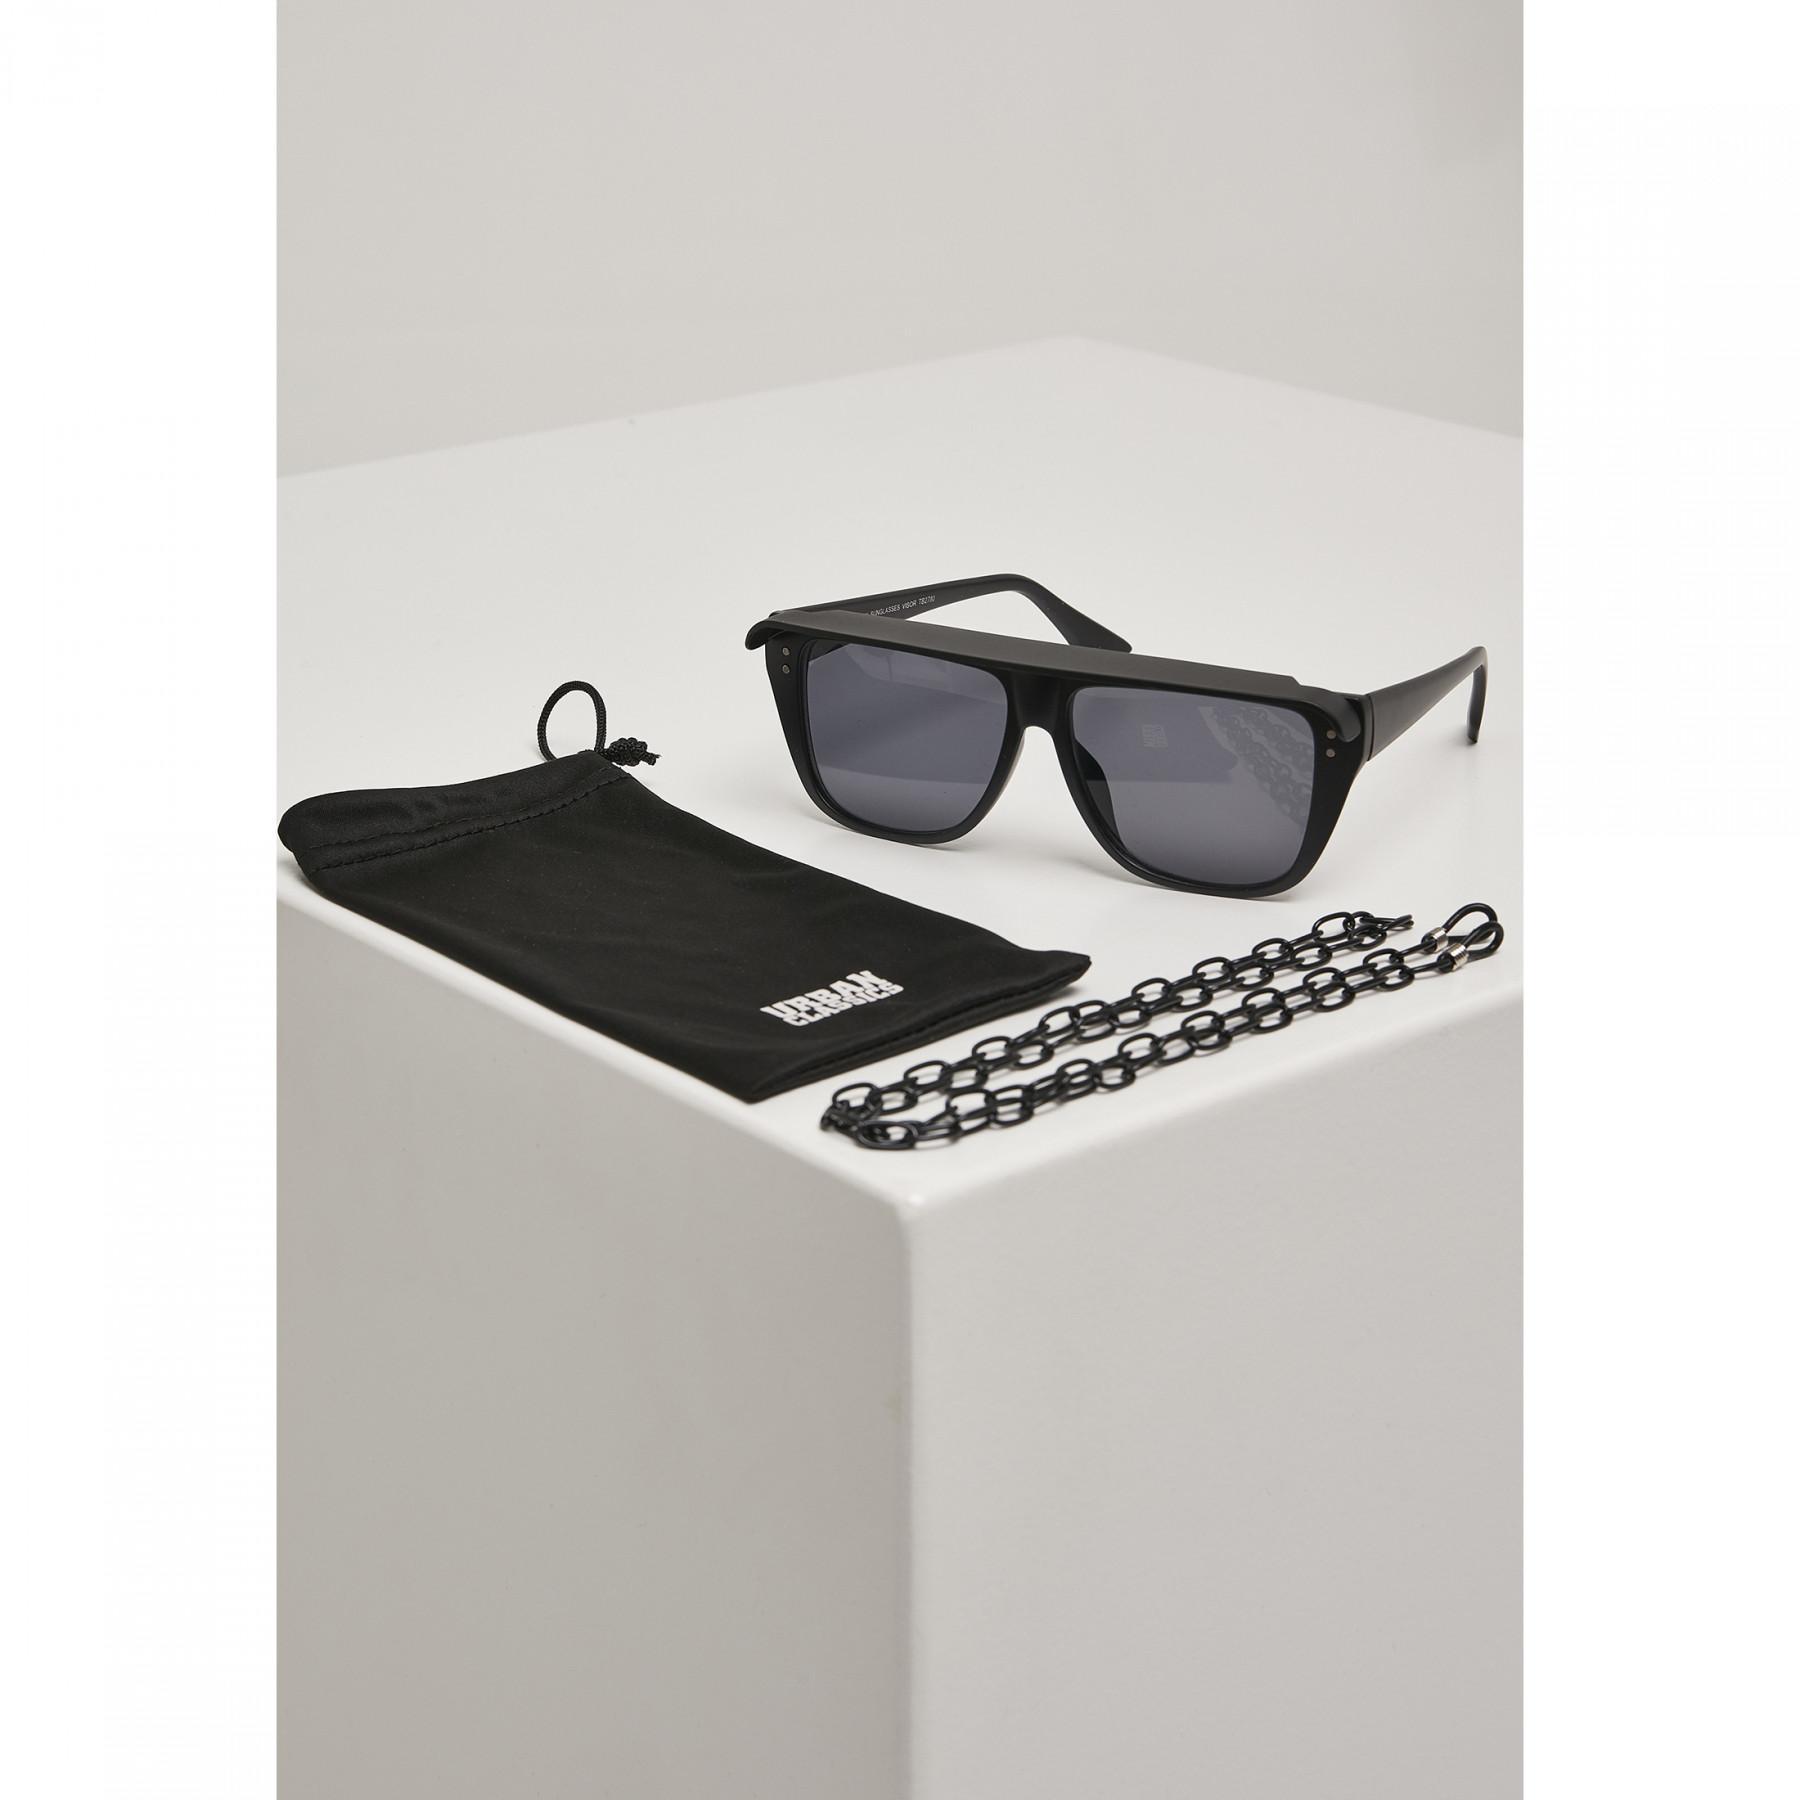 Urban Classic 108 visor sunglasses